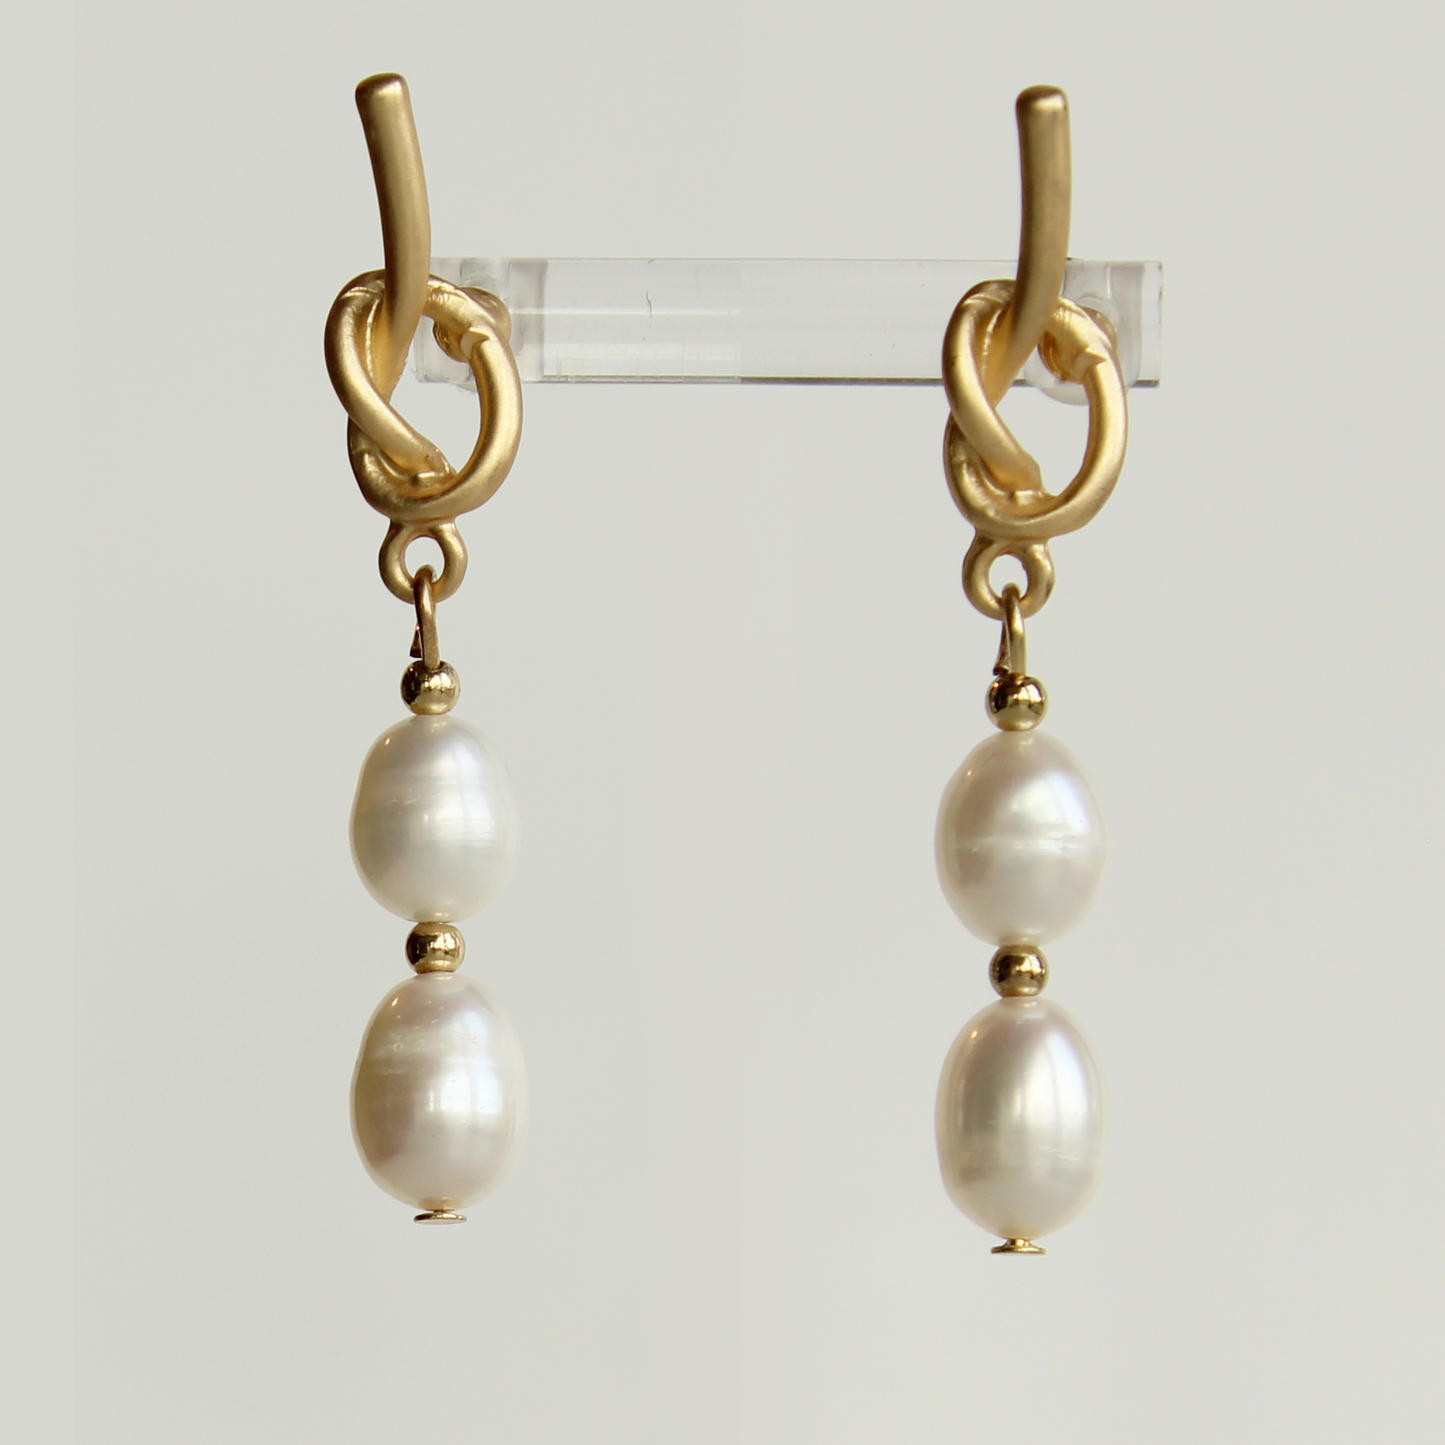 Two natural freshwater pearl earrings